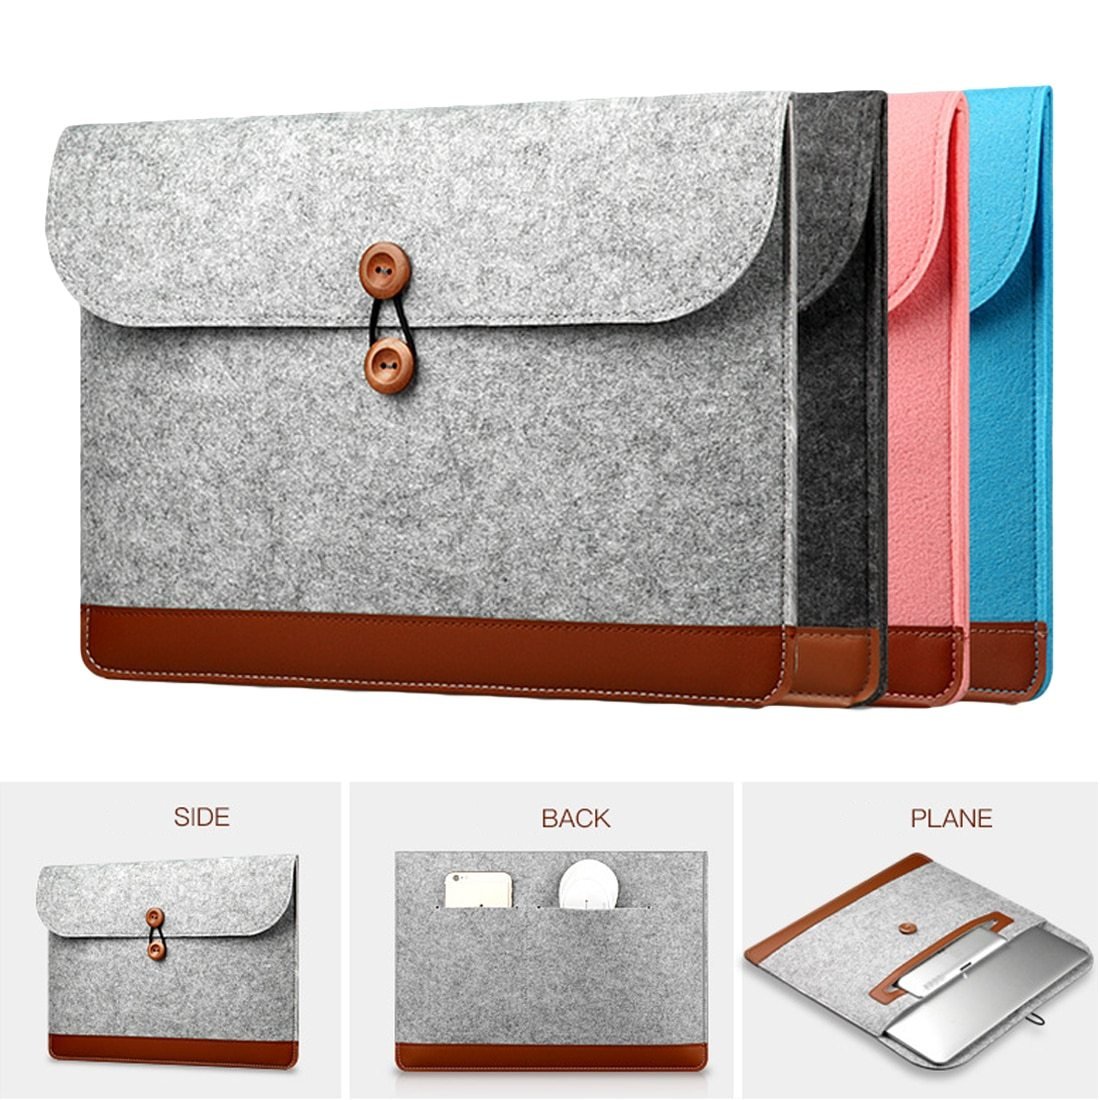 Wool Felt Laptop Sleeve Bag For Macbook Air Pro Retina 11 12 13 15 Inch Notebook String Handbag Cover Case for Macbook Touch Bar GreatEagleInc